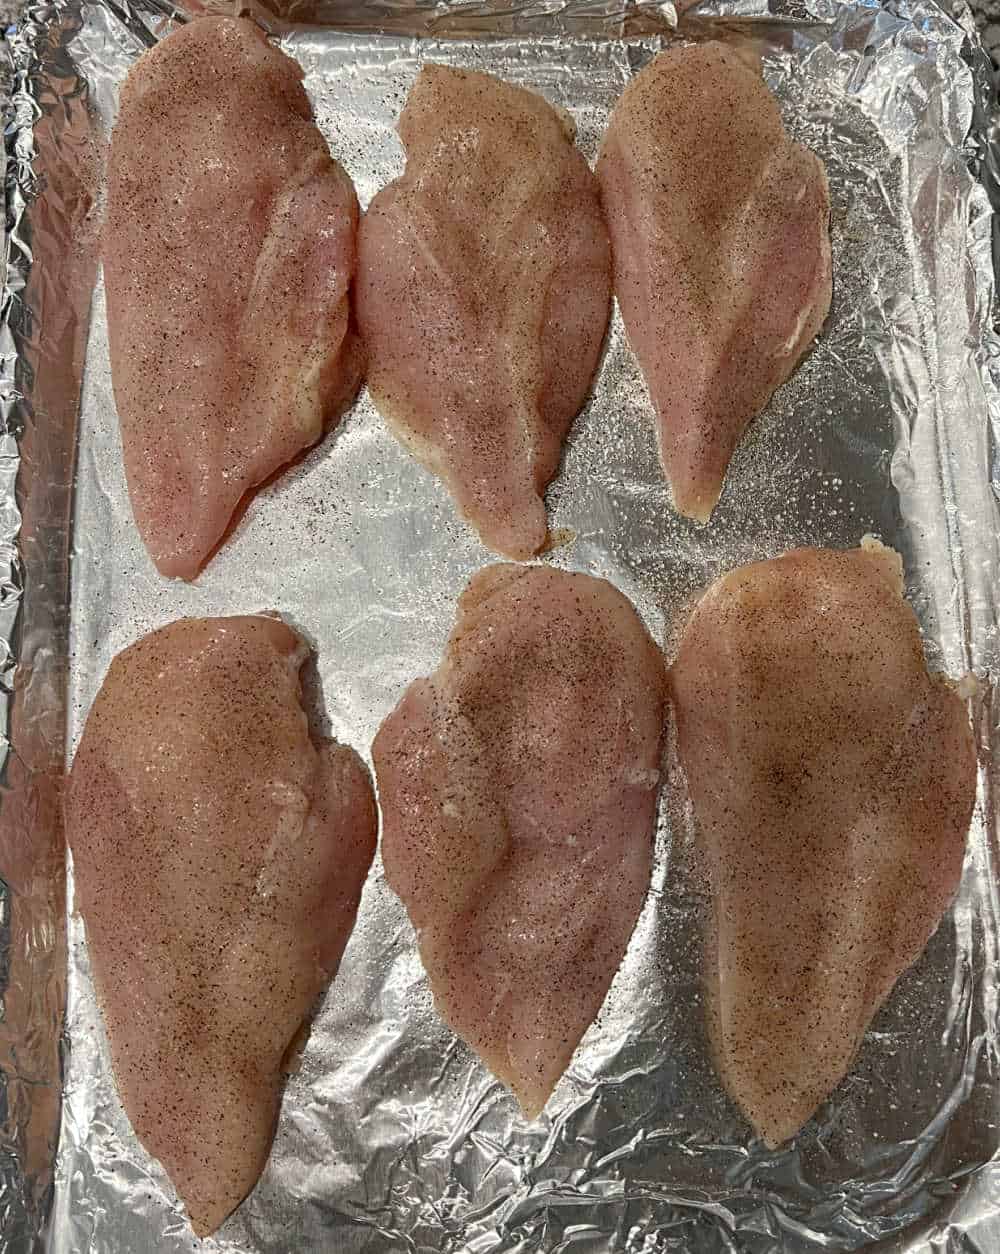 boneless skinless chicken breast on baking sheet.